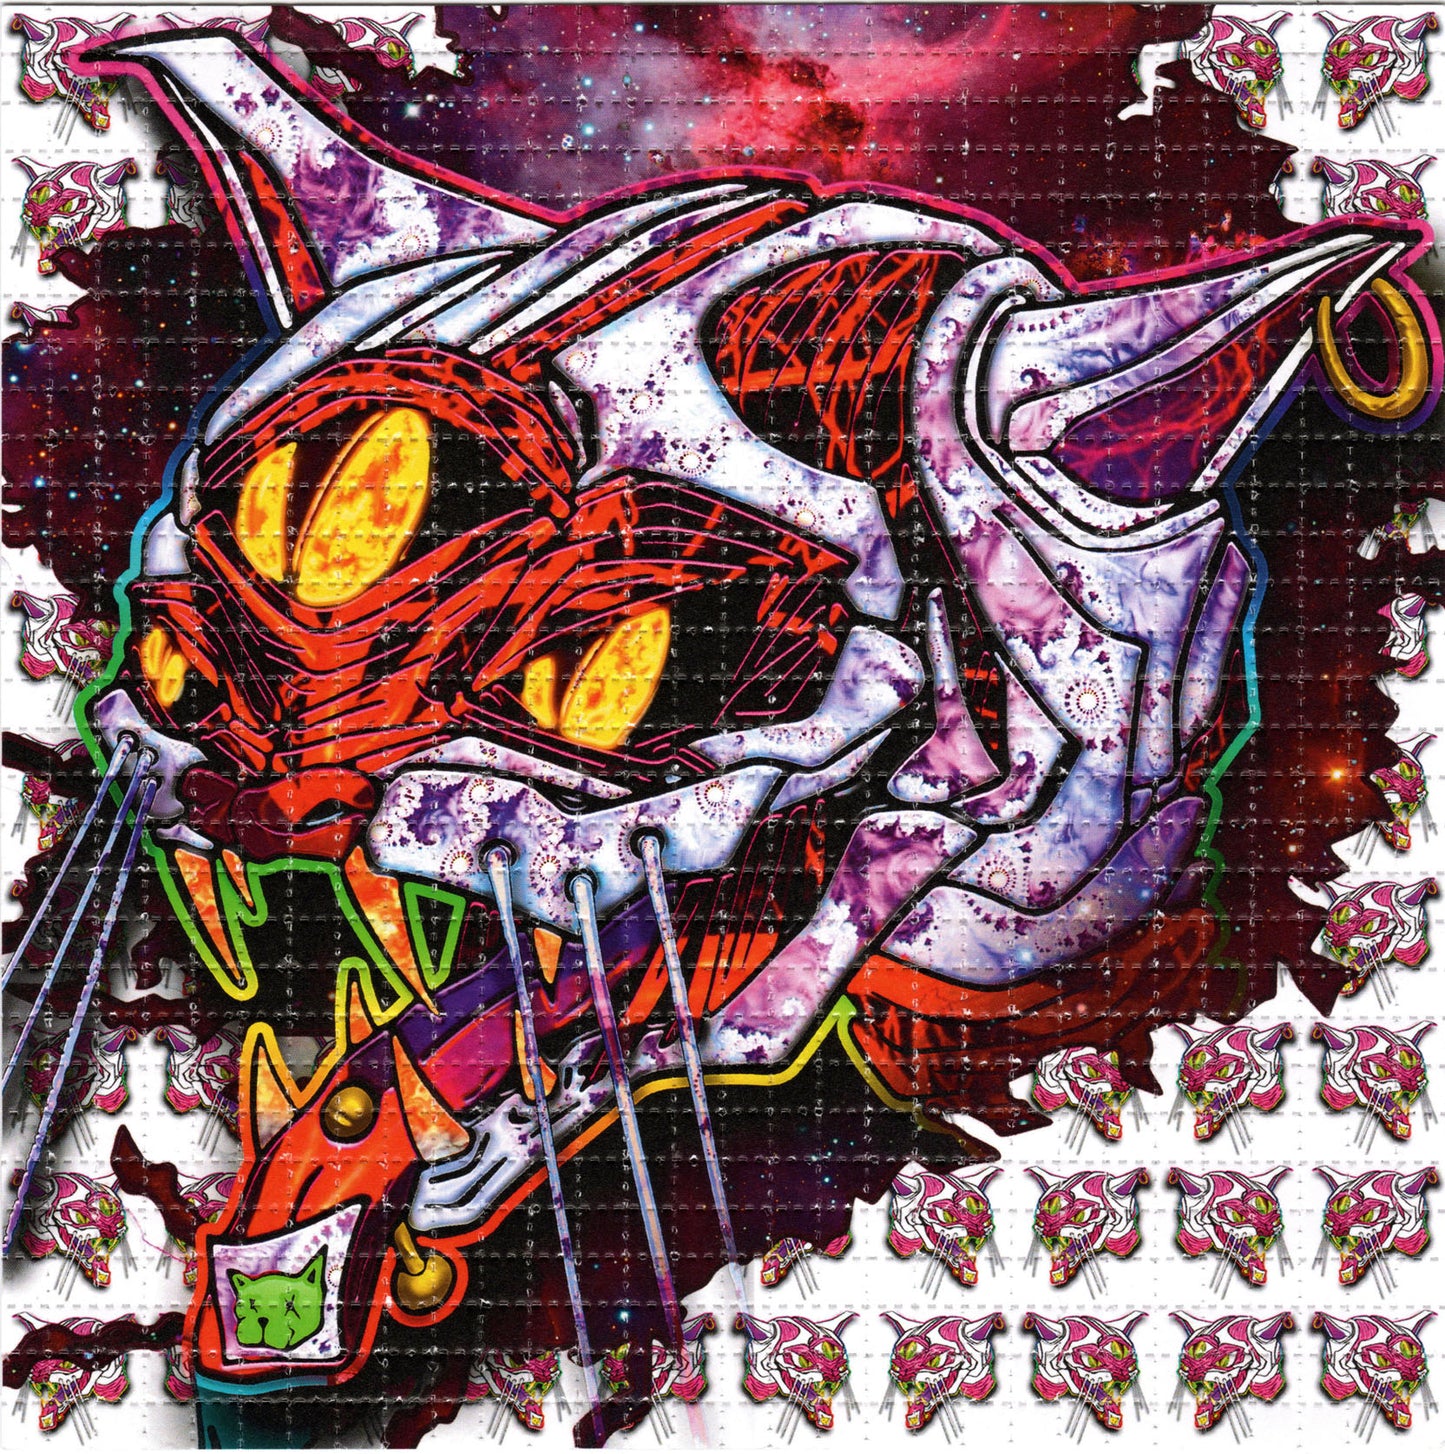 Tabby ThunderCat by Vini Kiniki SIGNED Limited Edition LSD blotter art print